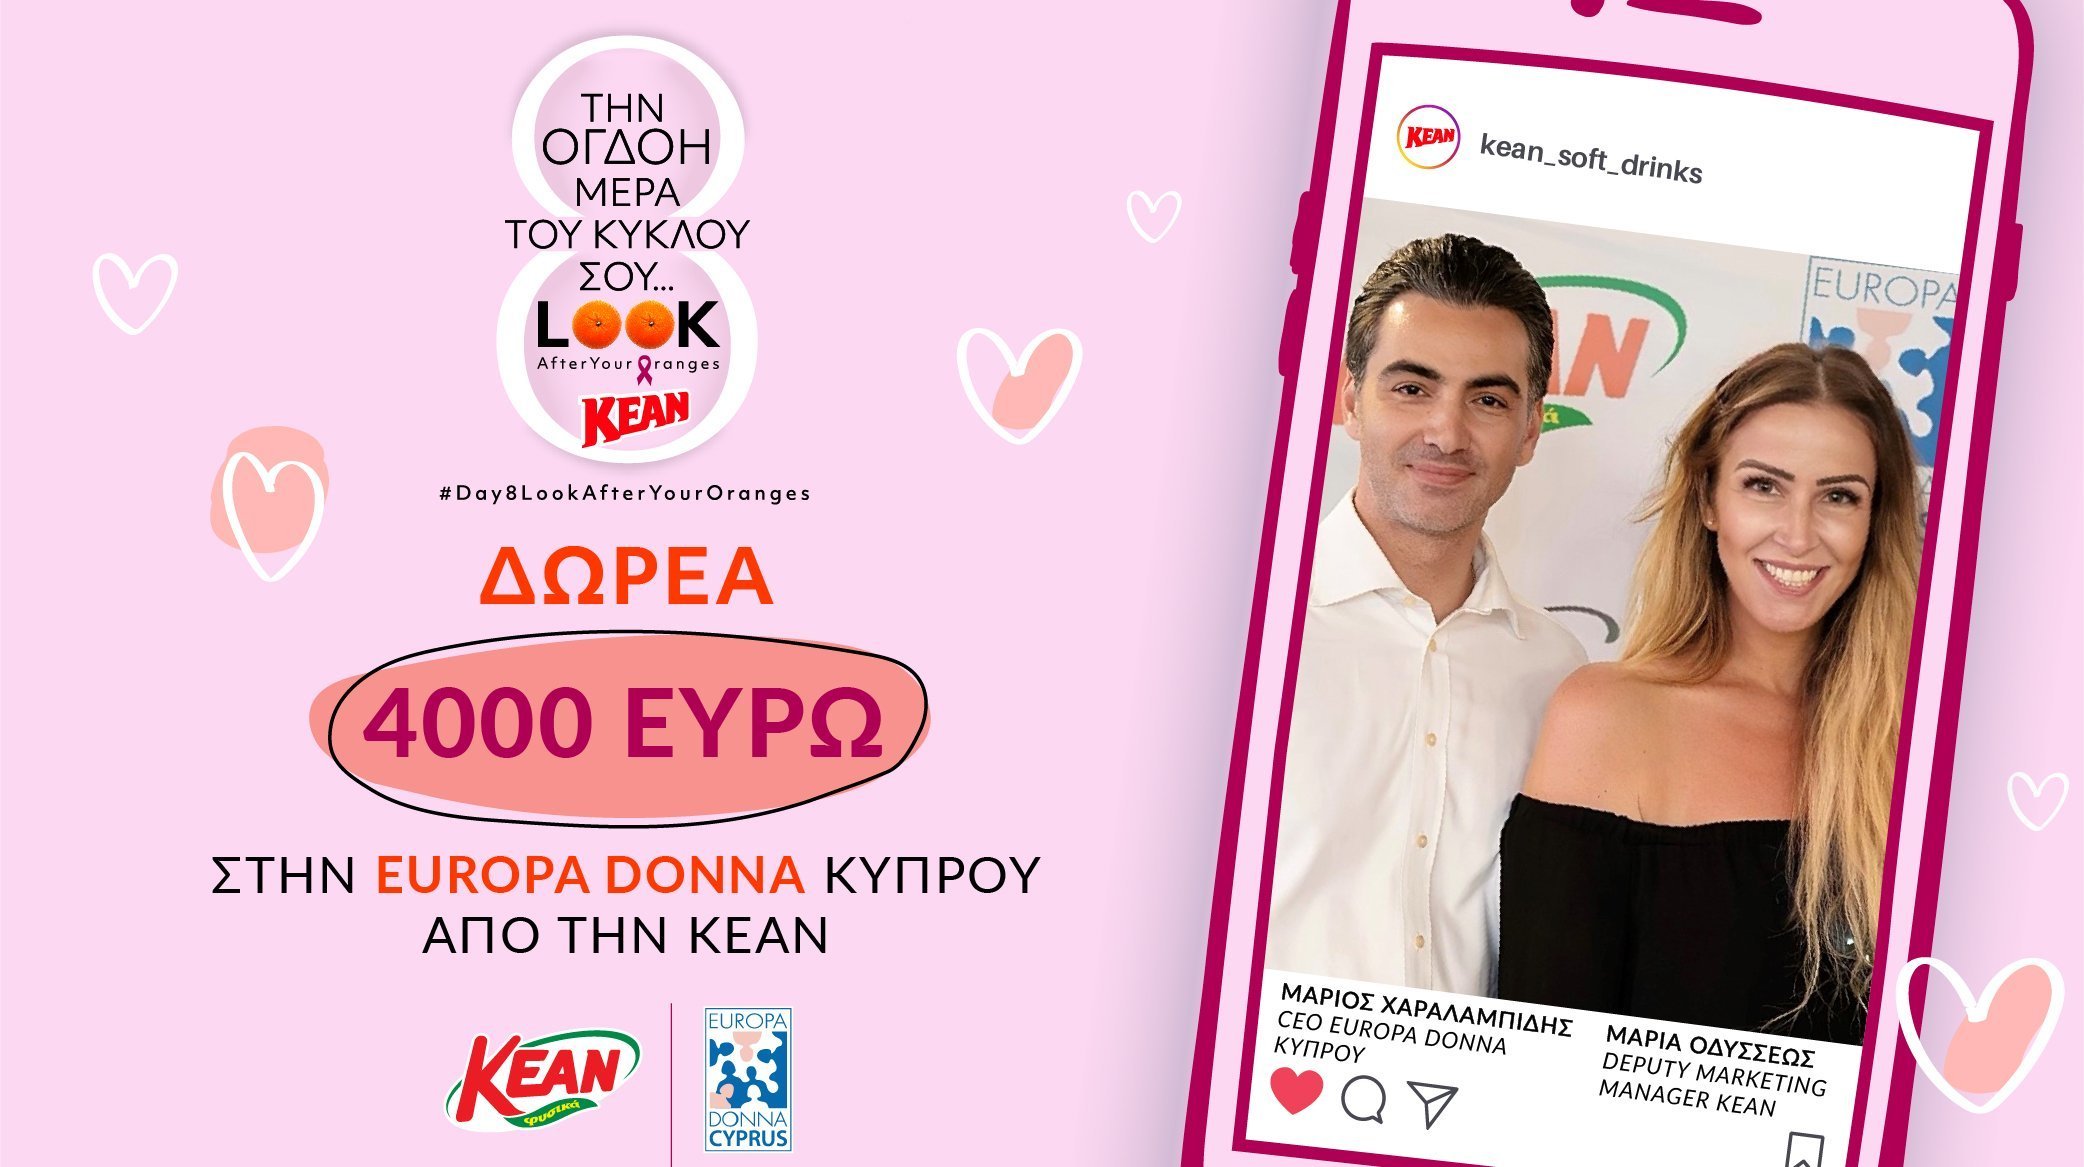 #Day8LookAfterYourOranges: Η καμπάνια της KEAN που συγκέντρωσε 2.000 selfies και 4.000 ευρώ για την Europa Donna Κύπρου